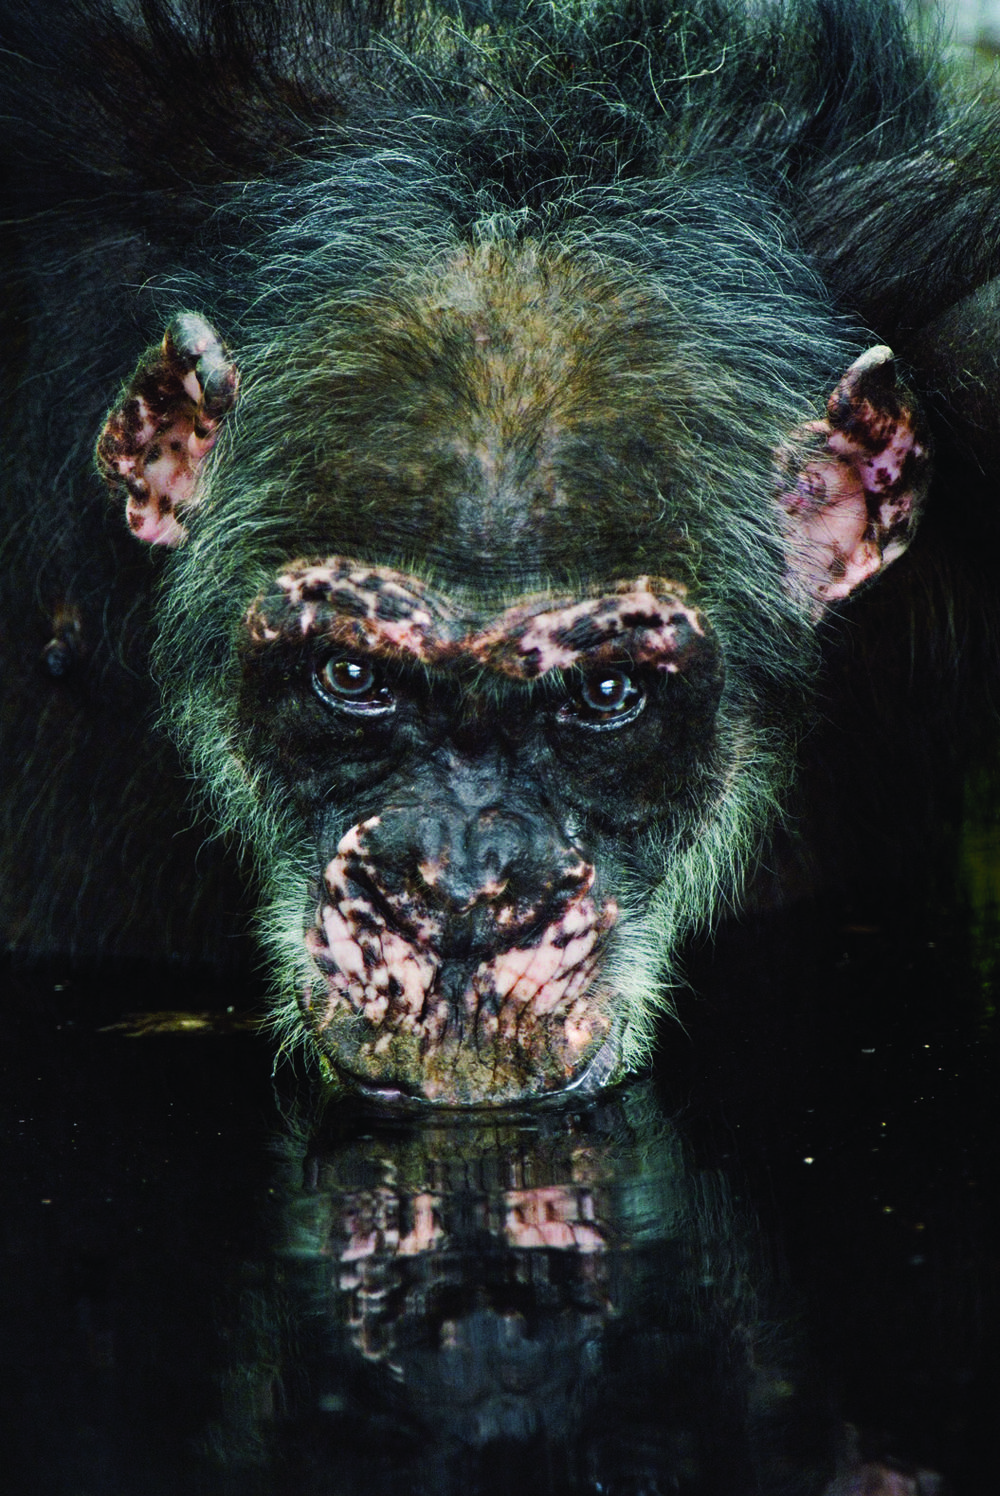 Chimpanzee drinking water